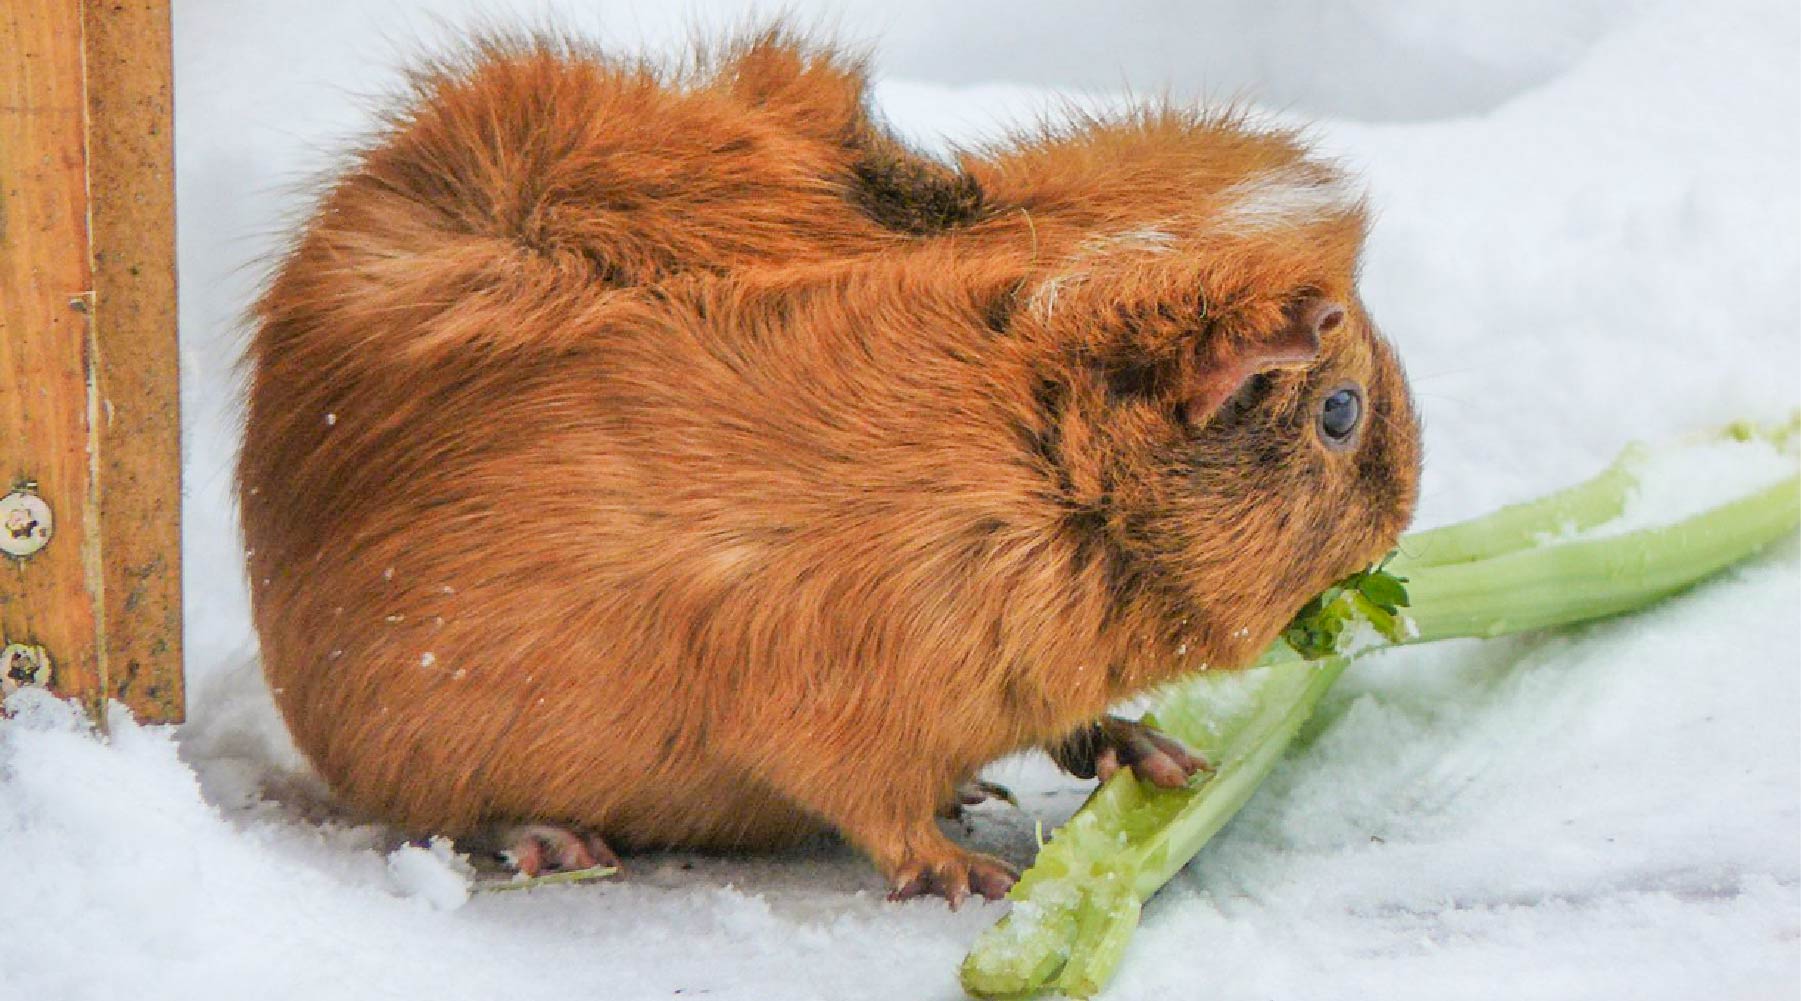 A Guinea Pig Eating Celery on Snow